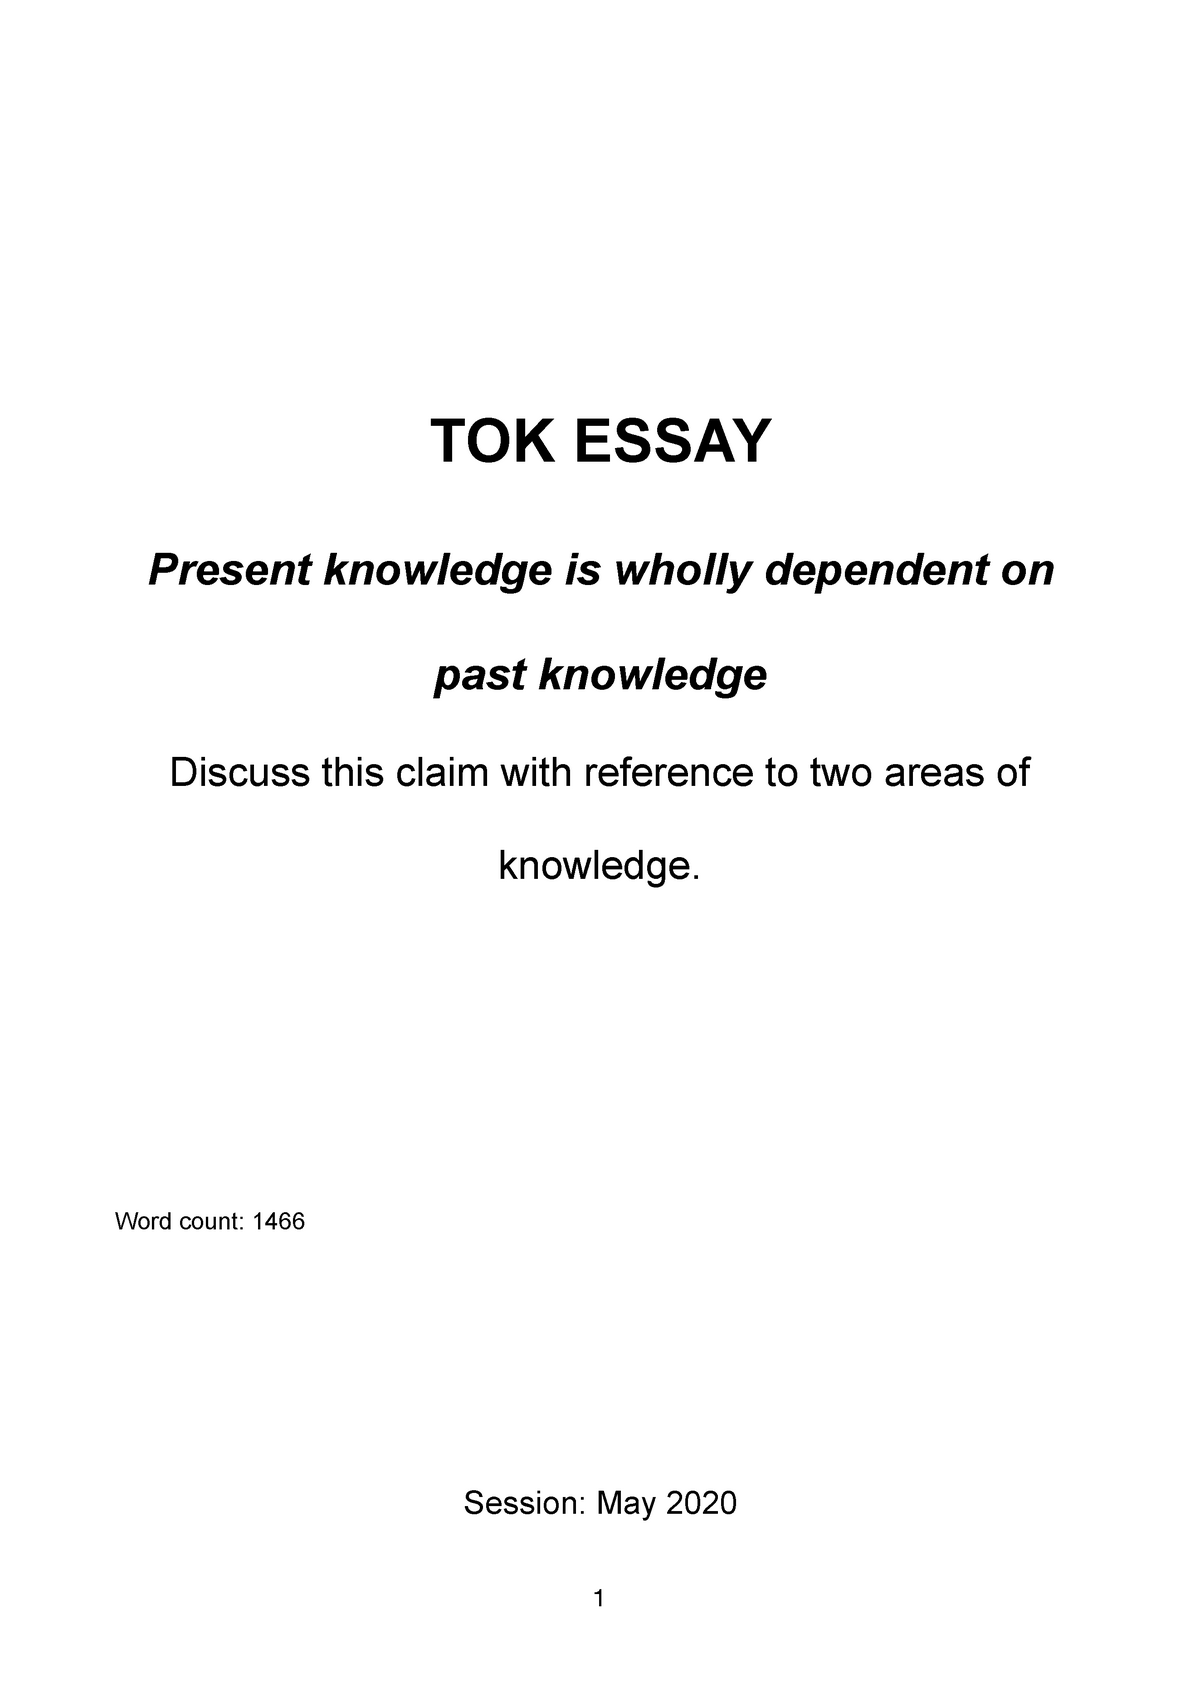 tok essay reflections